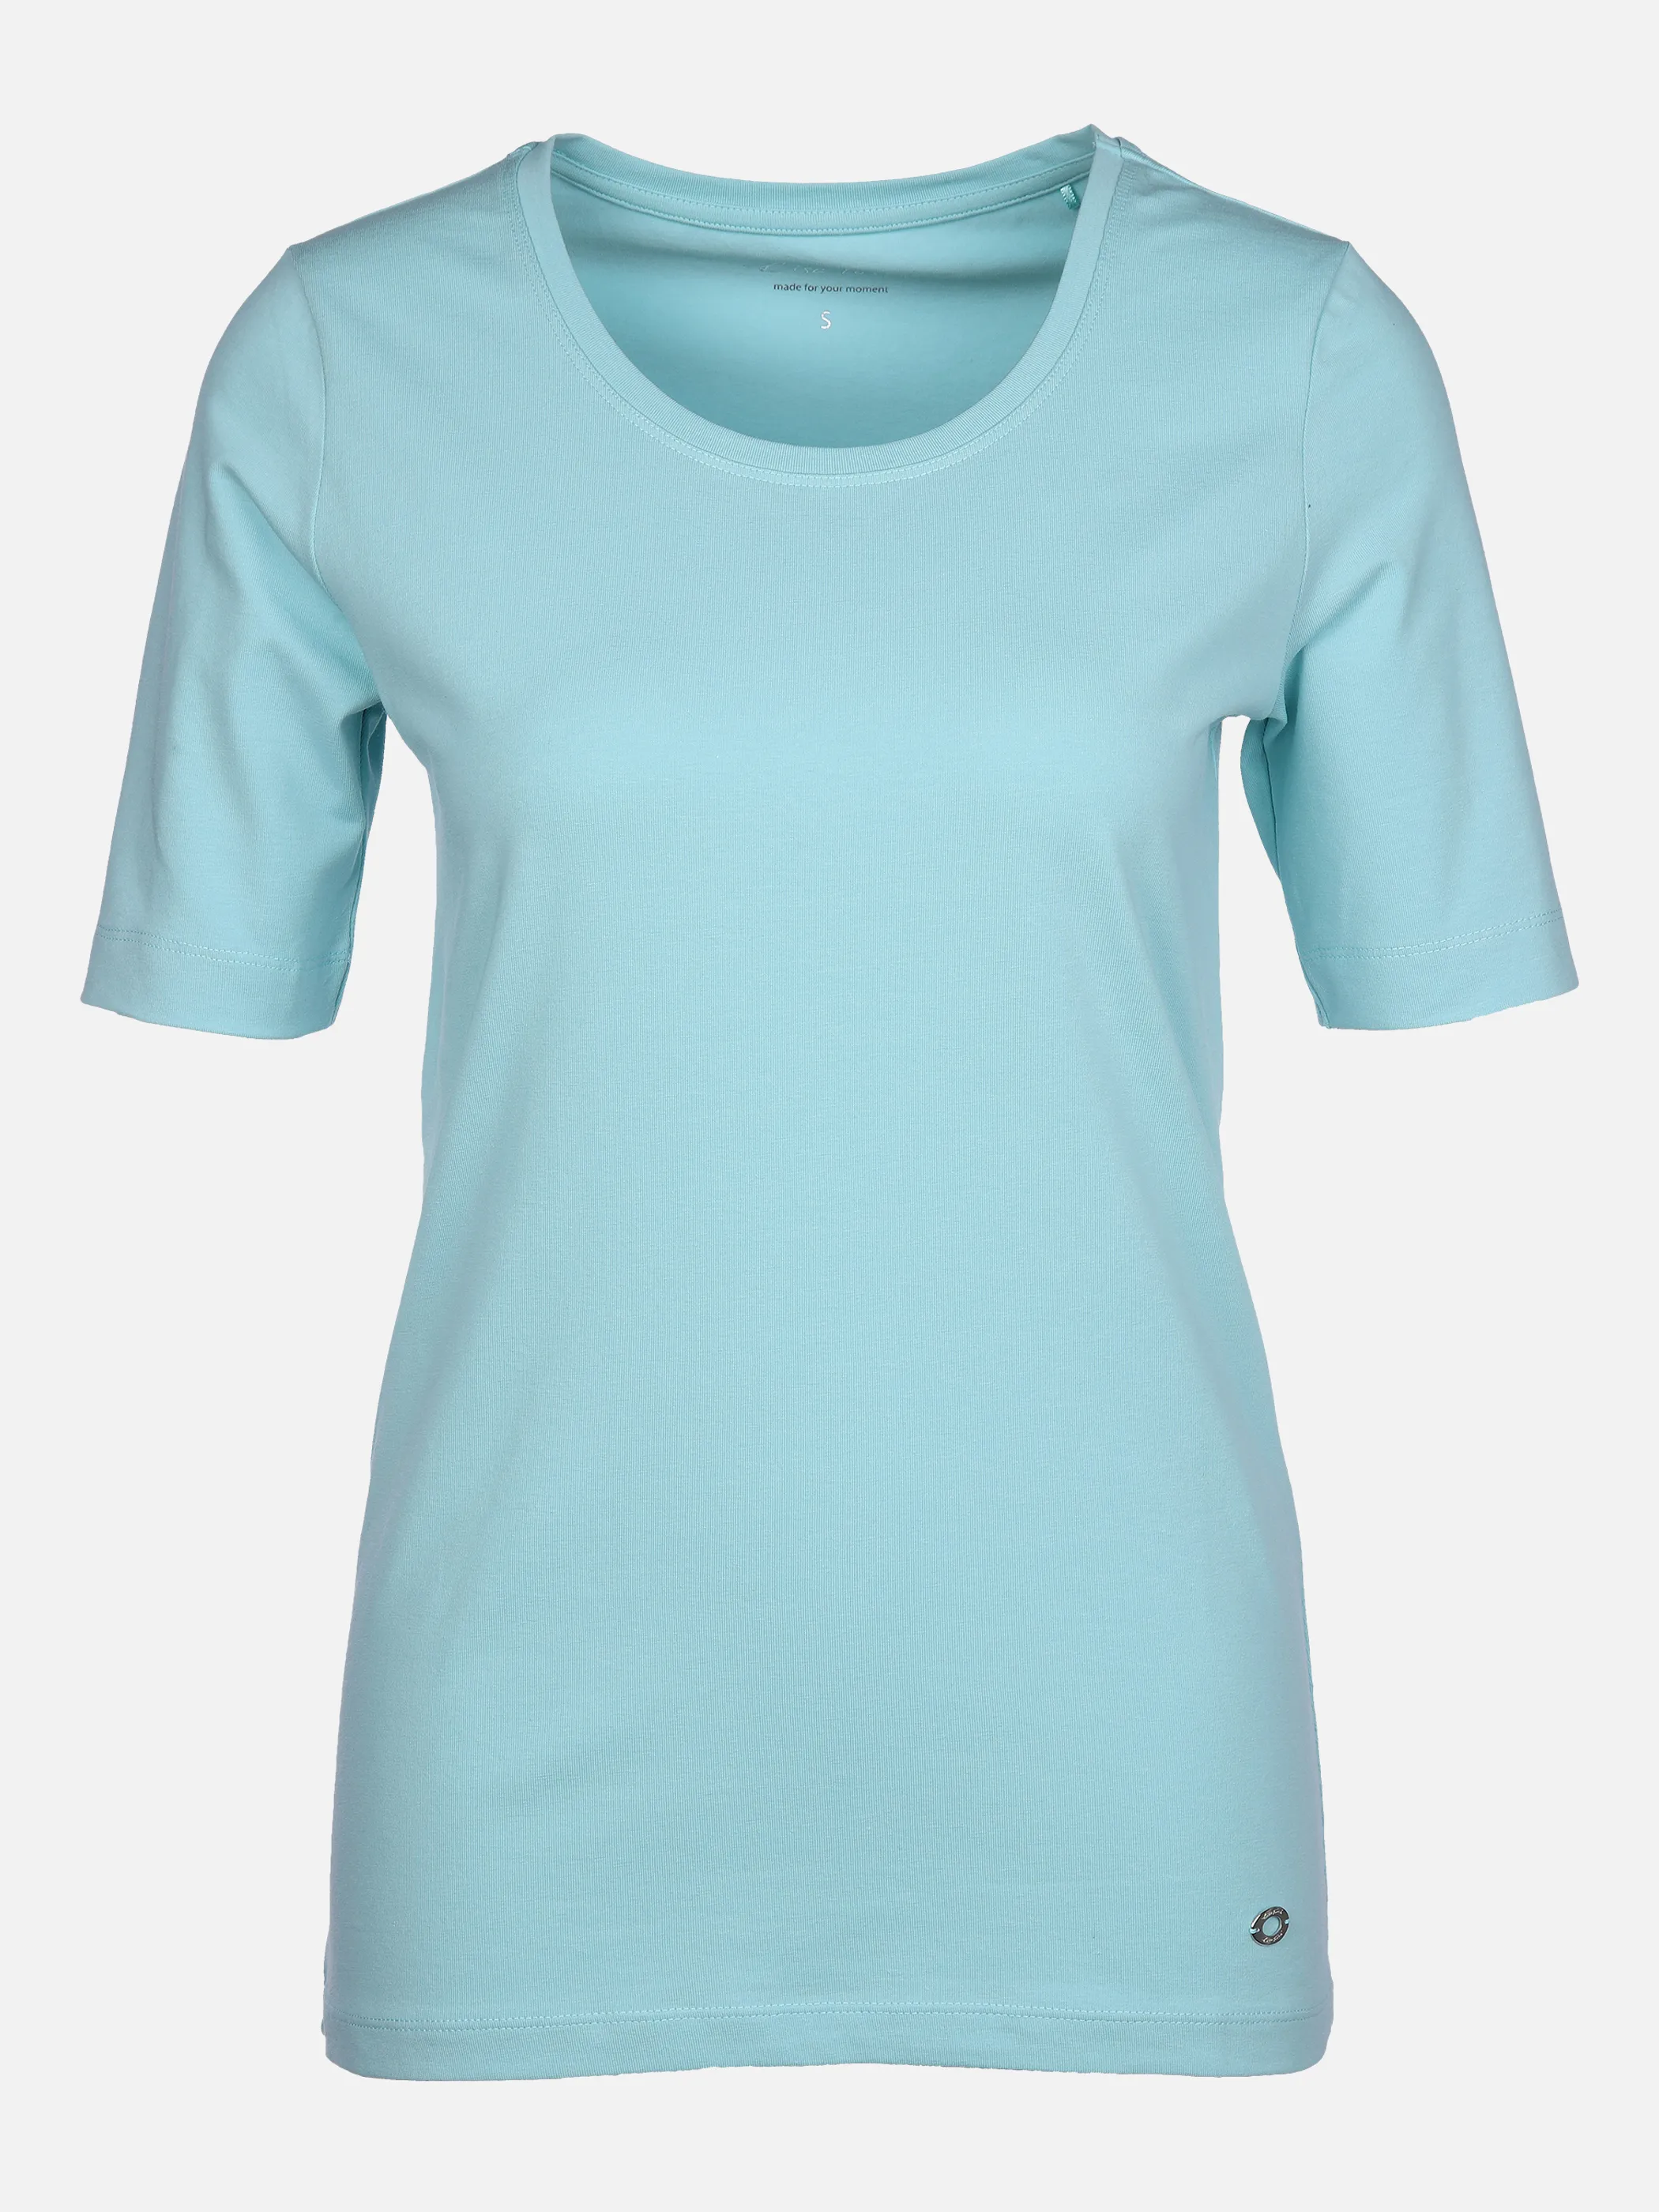 Lisa Tossa Da-Basic-Shirt m. Rundhals Grün 851518 SALBEI 1